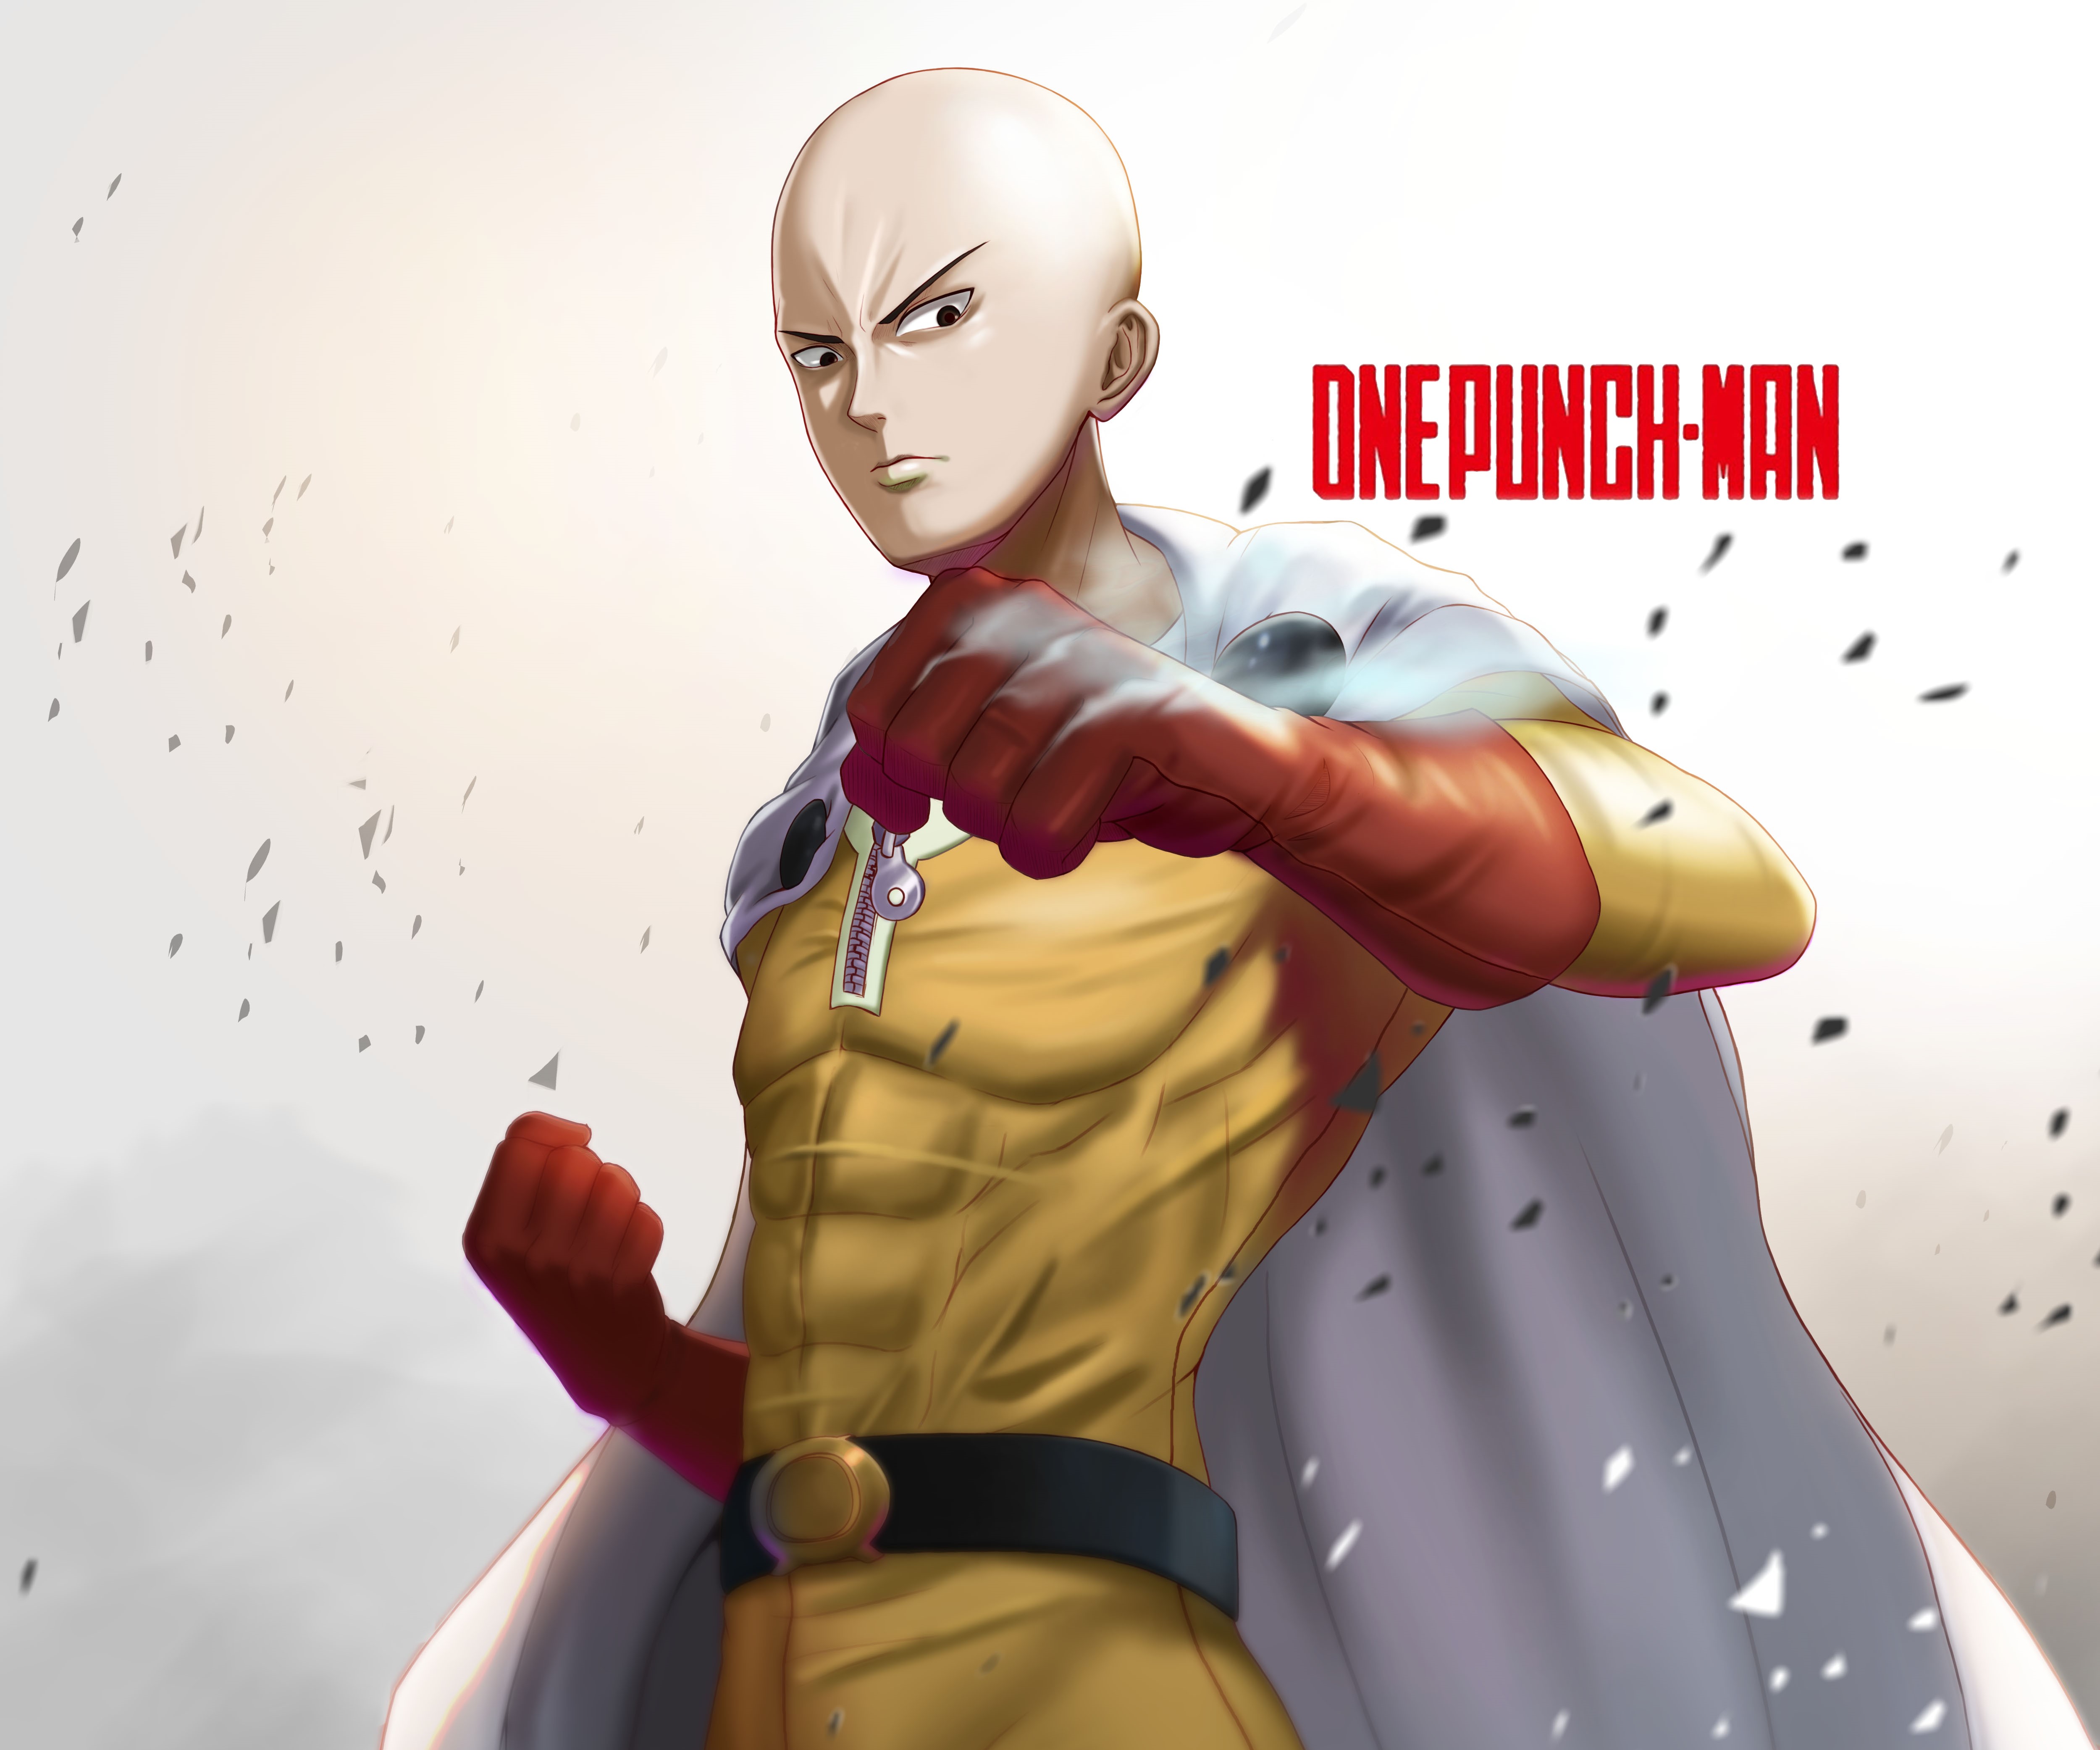 Anime One-Punch Man 4k Ultra HD Wallpaper by BD